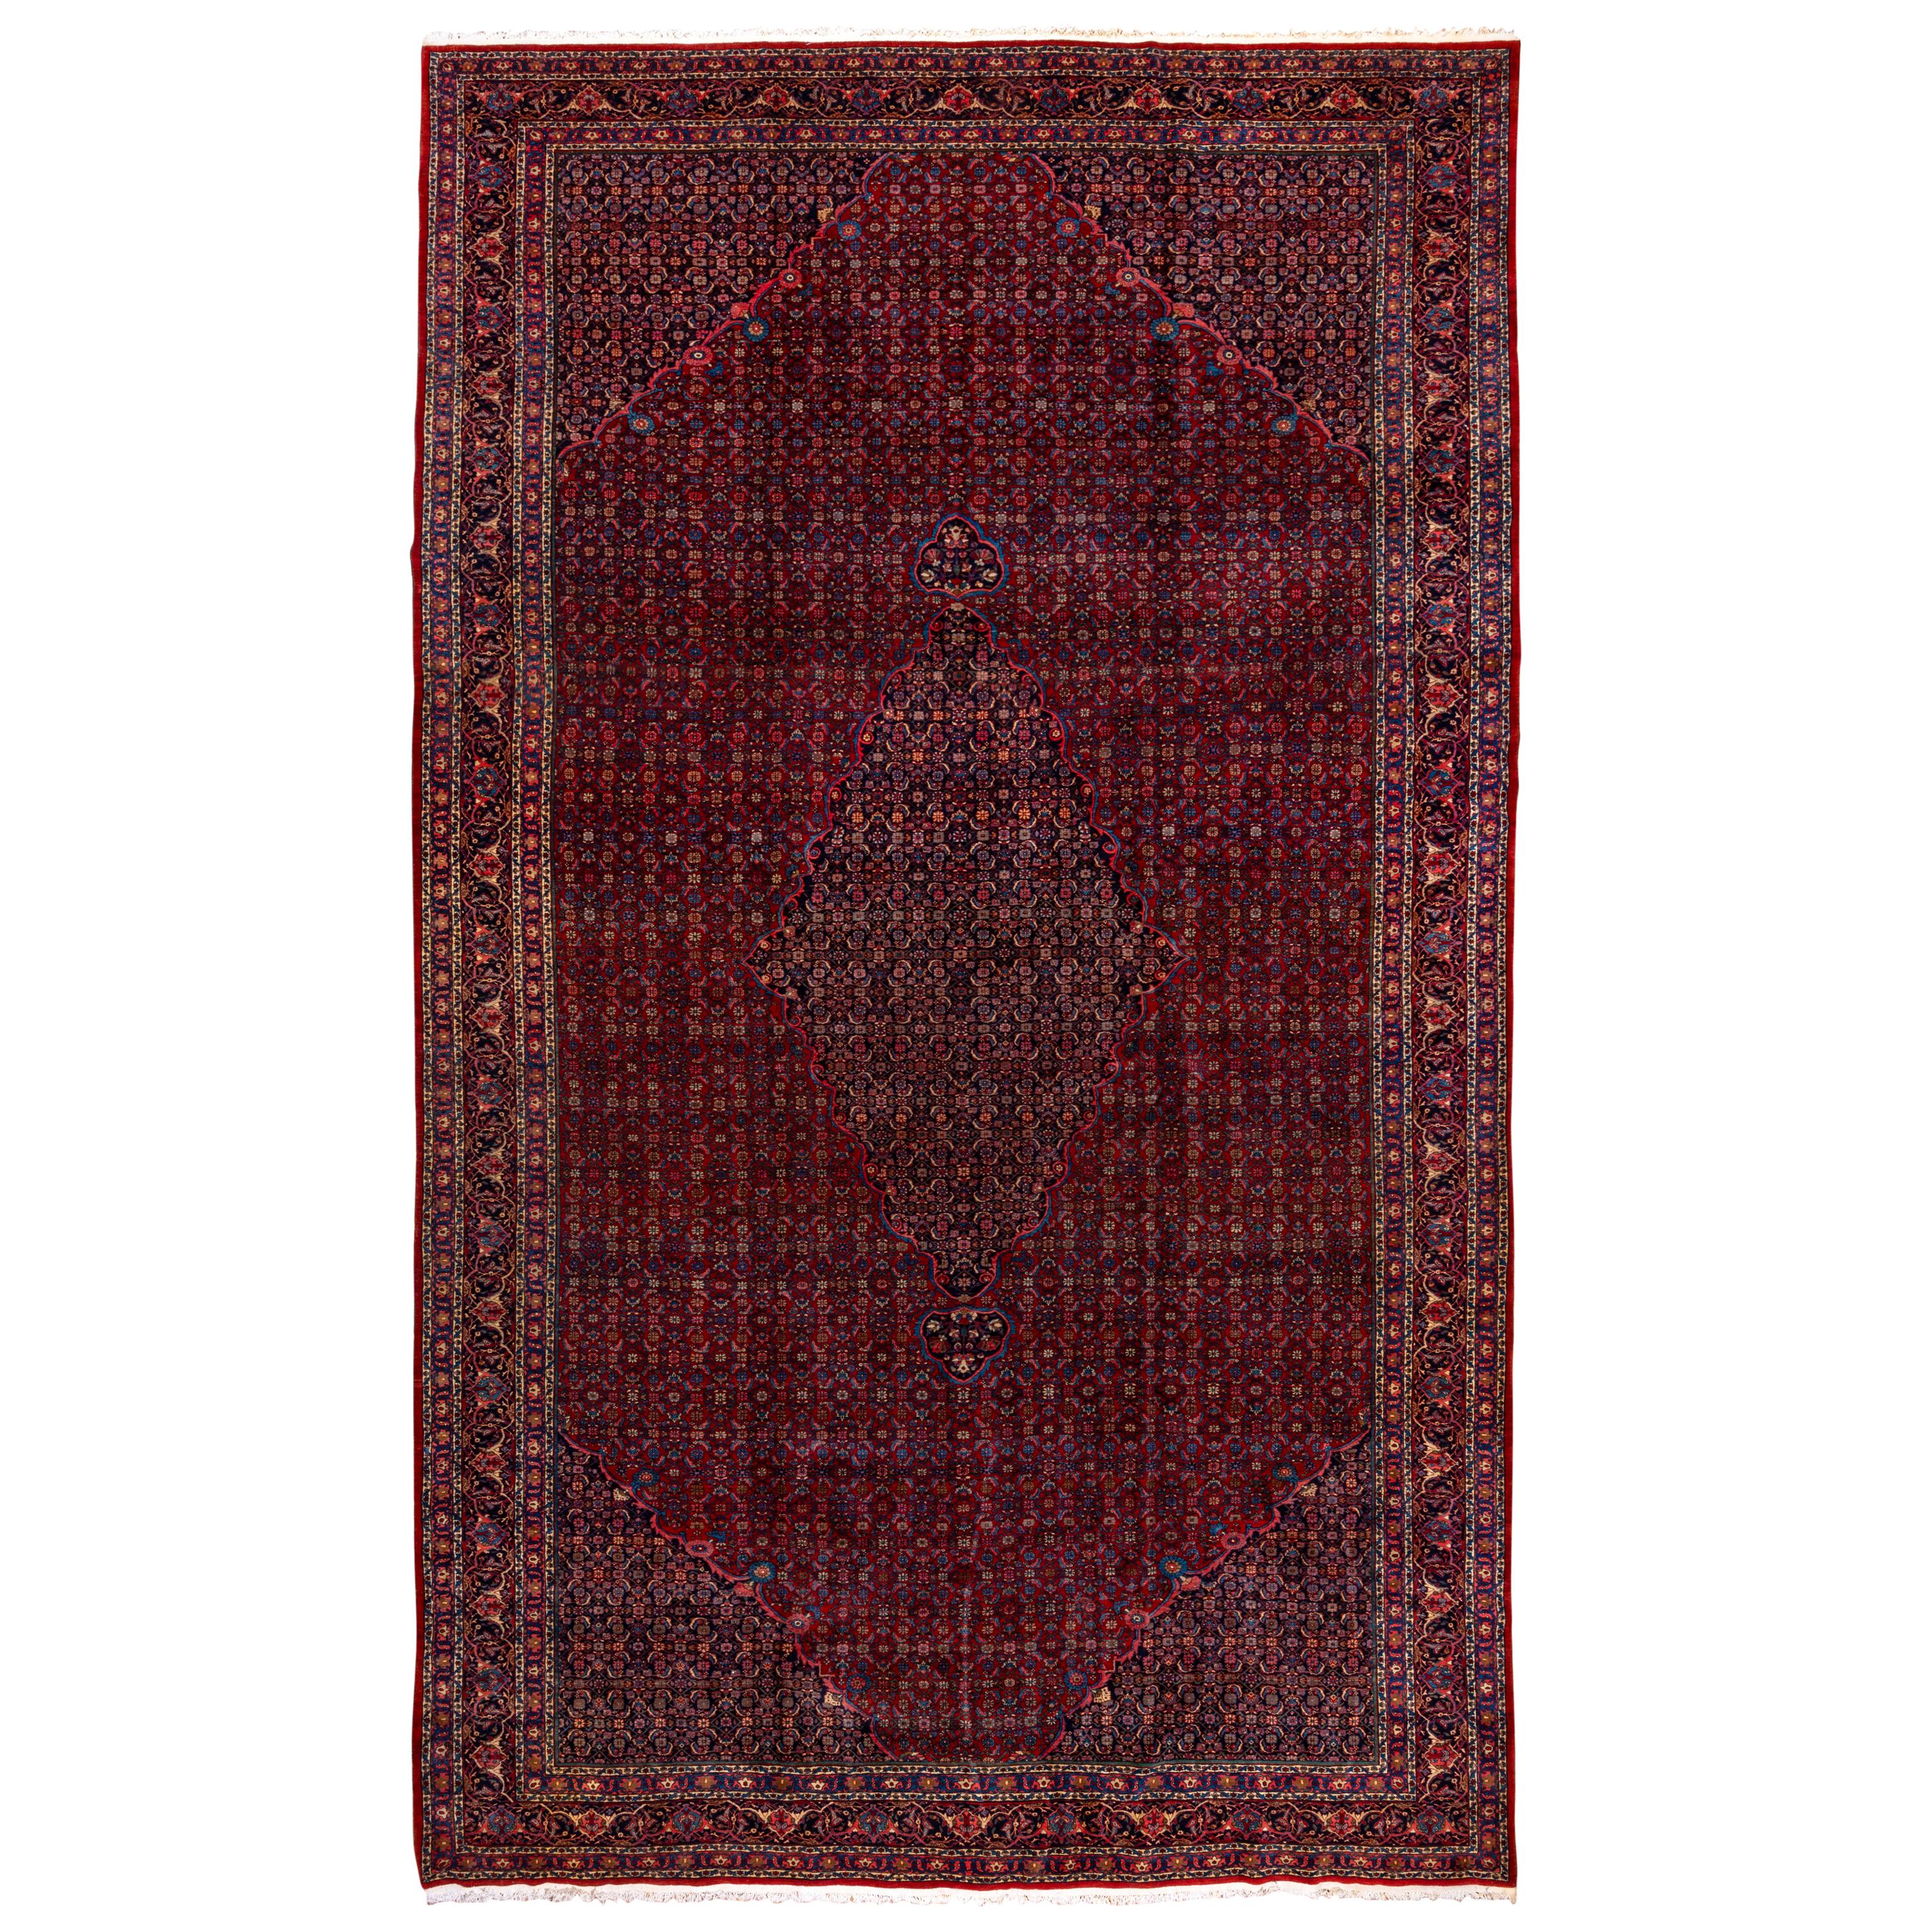 Tribal Persian Bidjar Carpet, Red Field